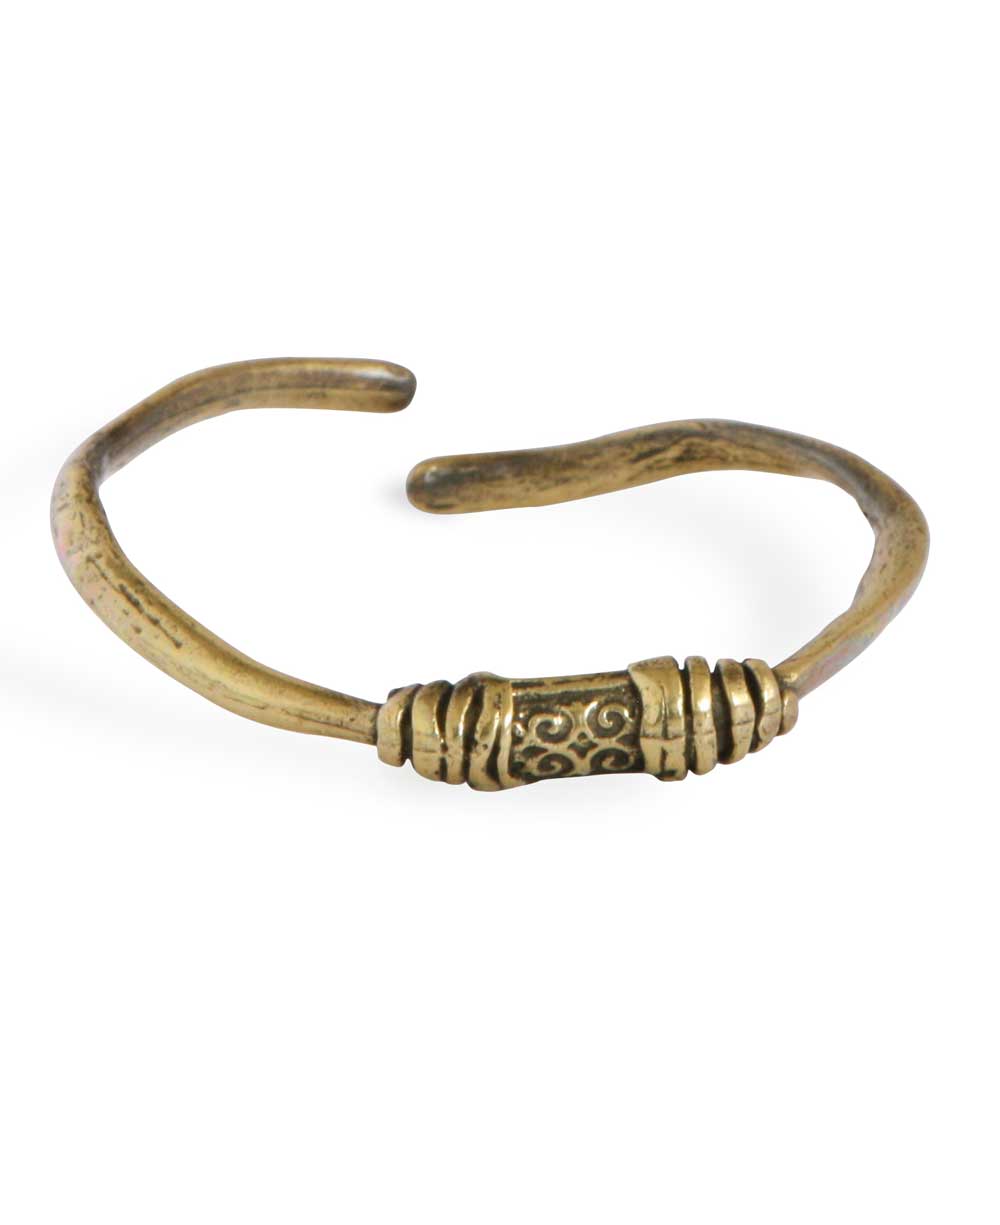 Bronze Bangle Bracelet